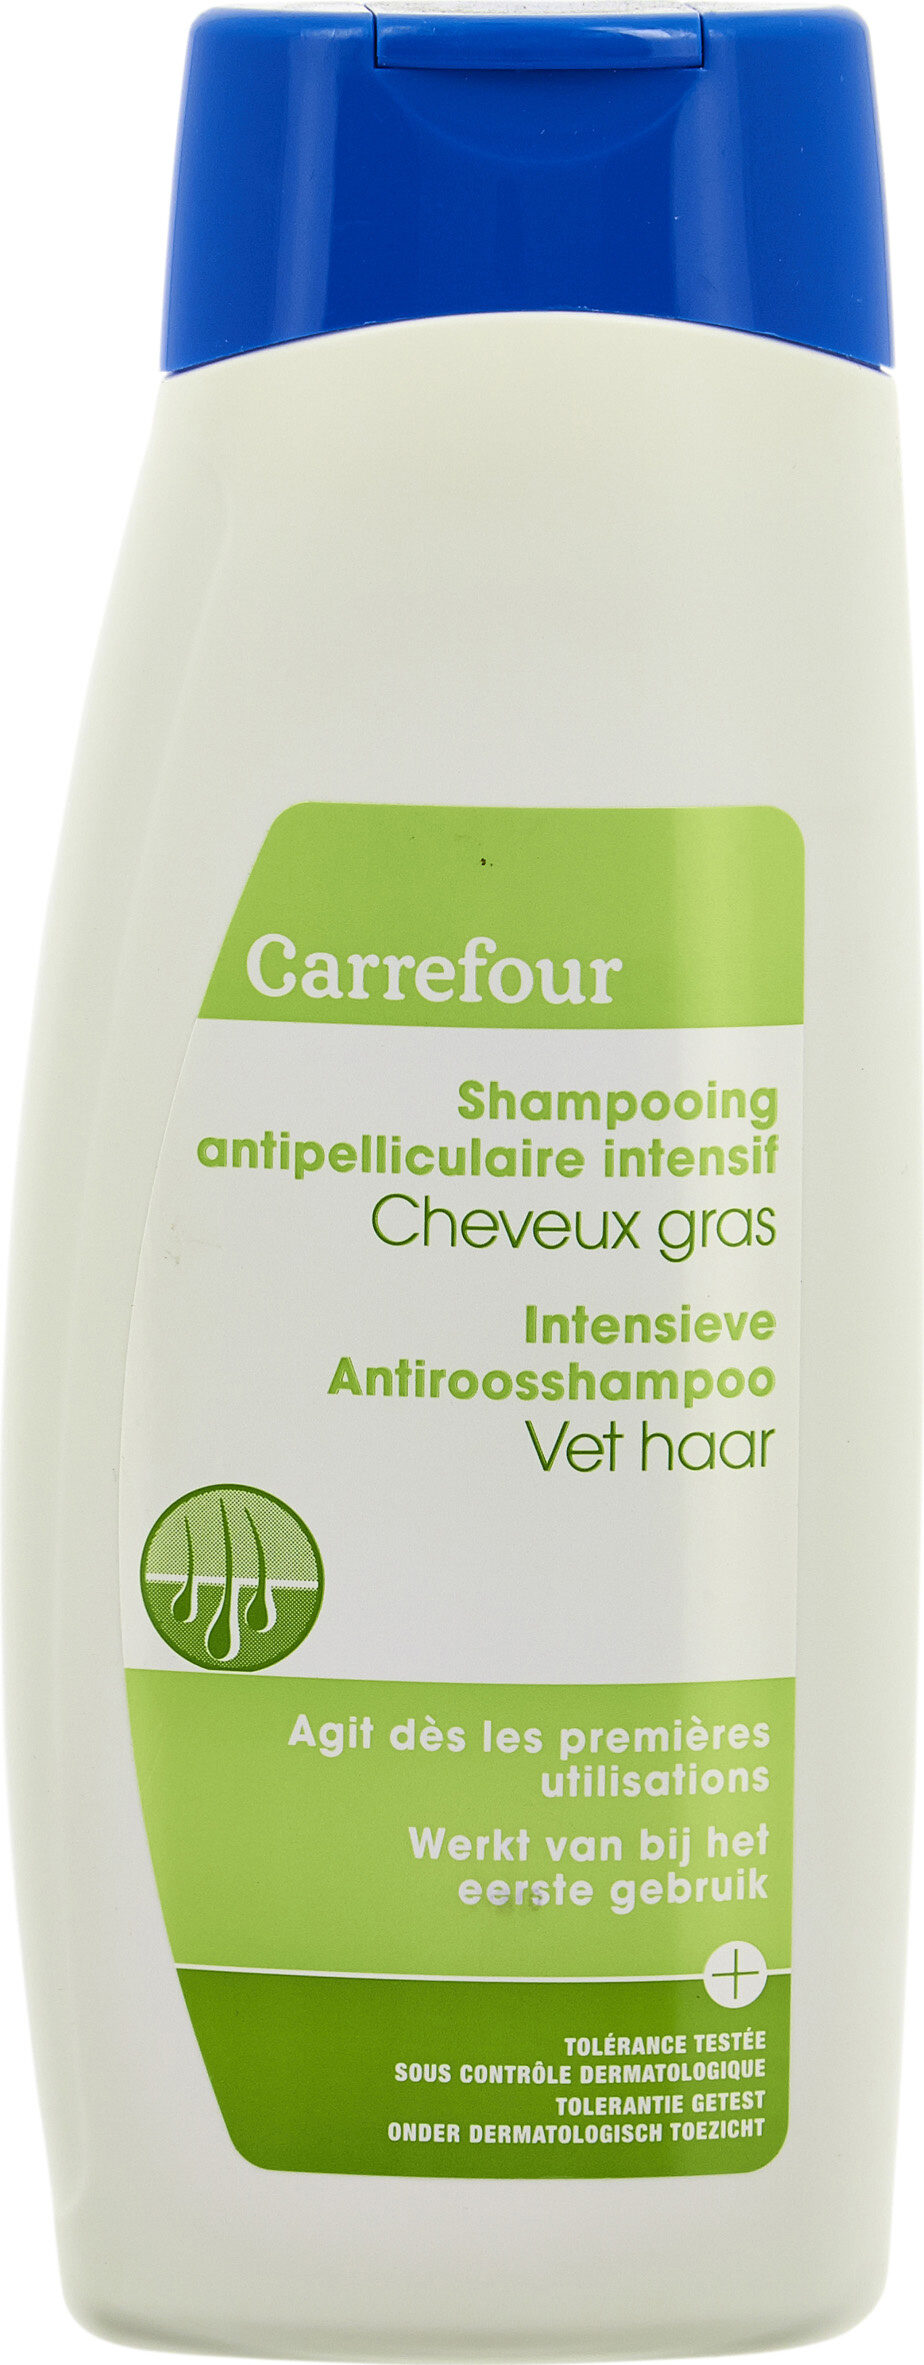 Shampooing antipelliculaire intensif Cheveux gras - Produit - fr